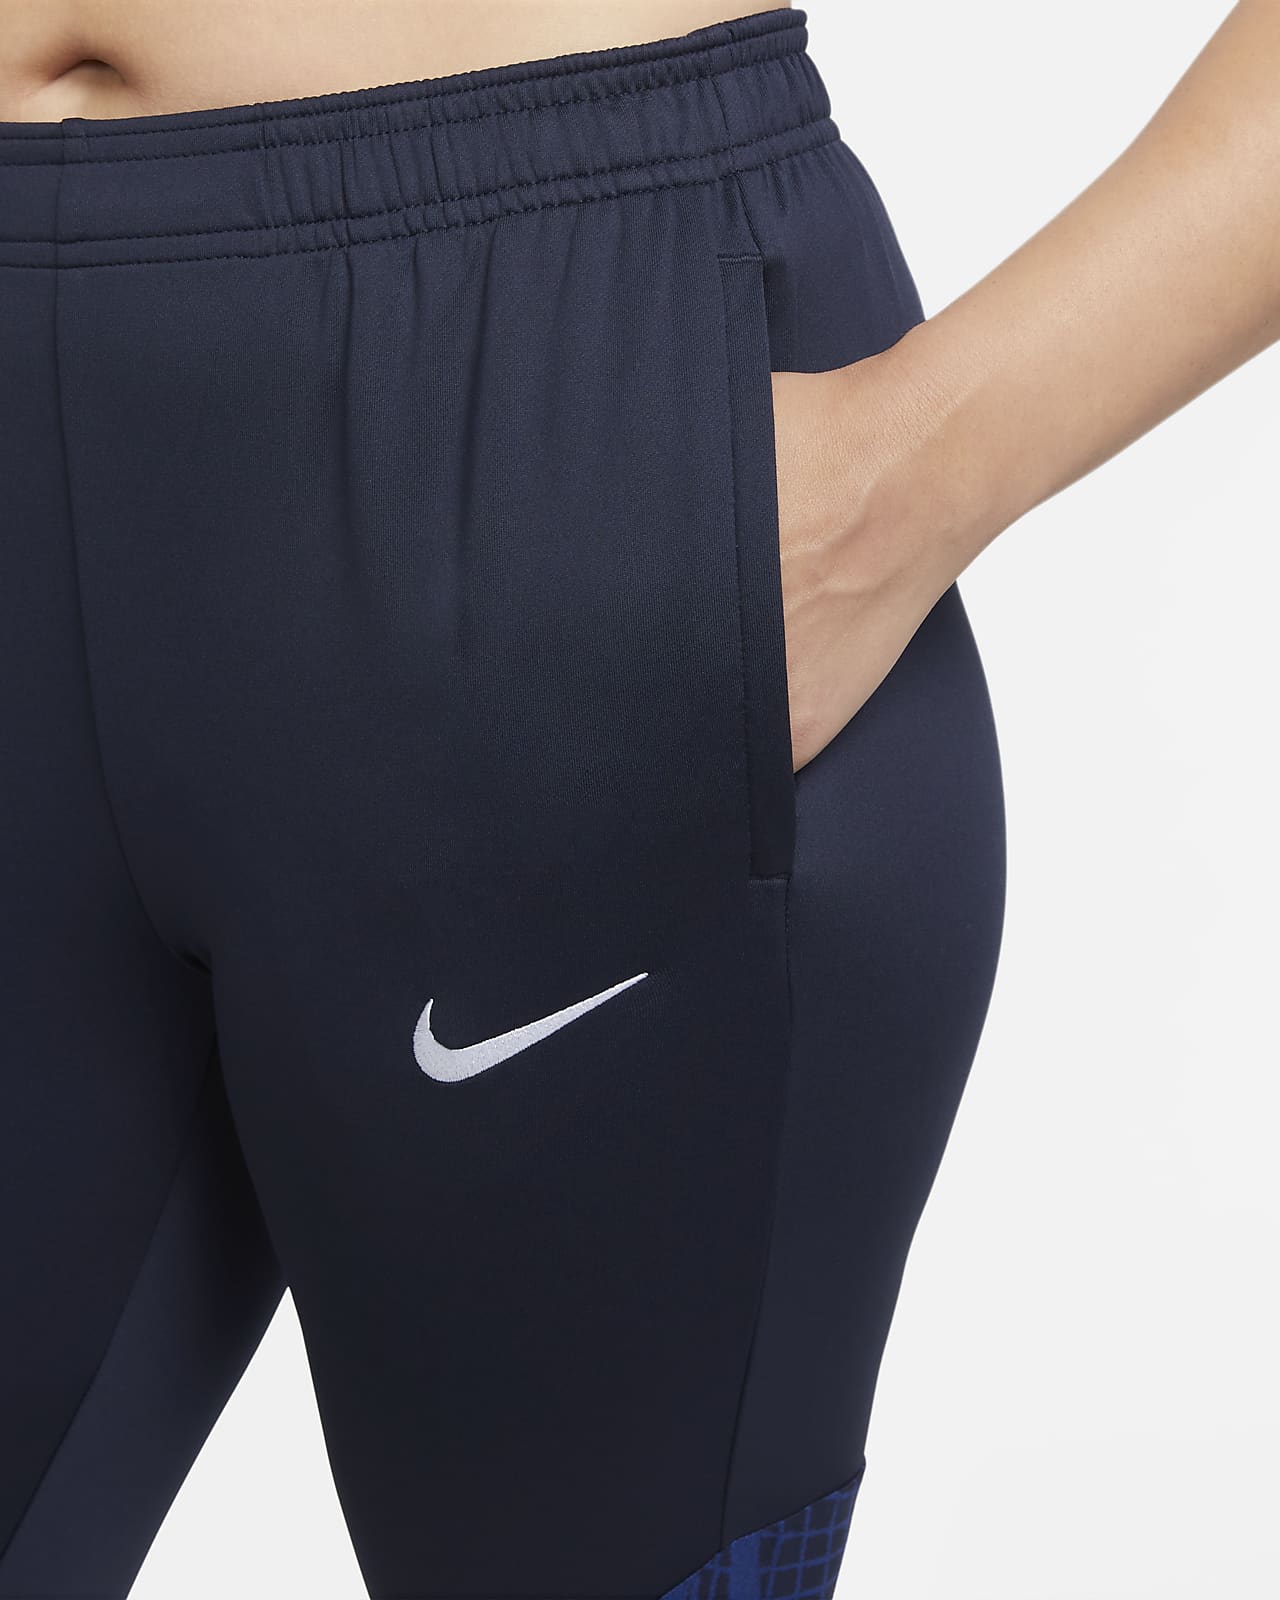 Pants de fútbol de tejido Knit para mujer Nike Dri-FIT U.S. Strike